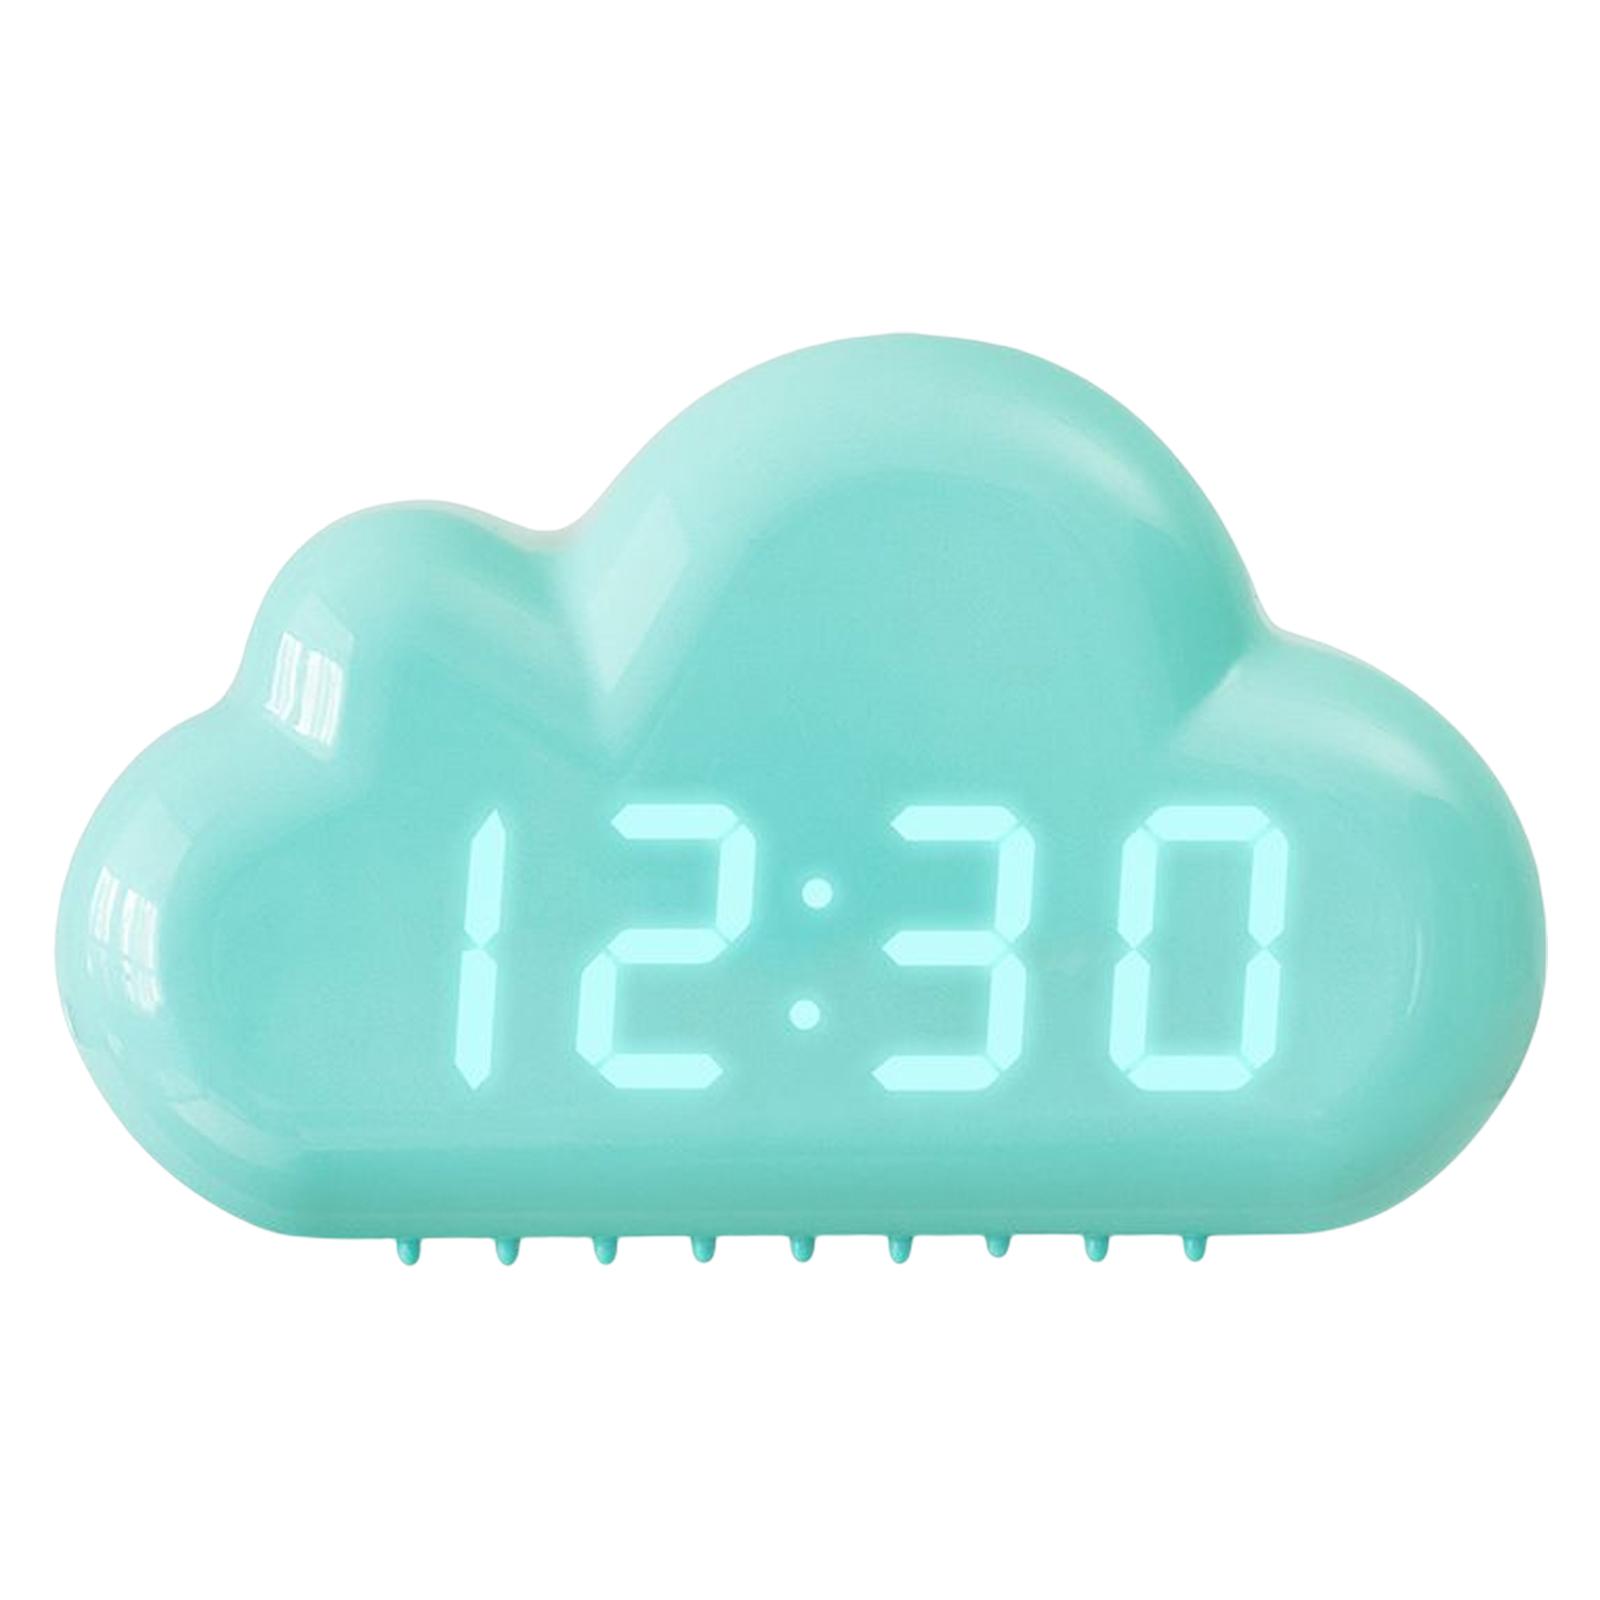 Digital Alarm Clock Sound Control Snooze Time Date Temperature Display Blue